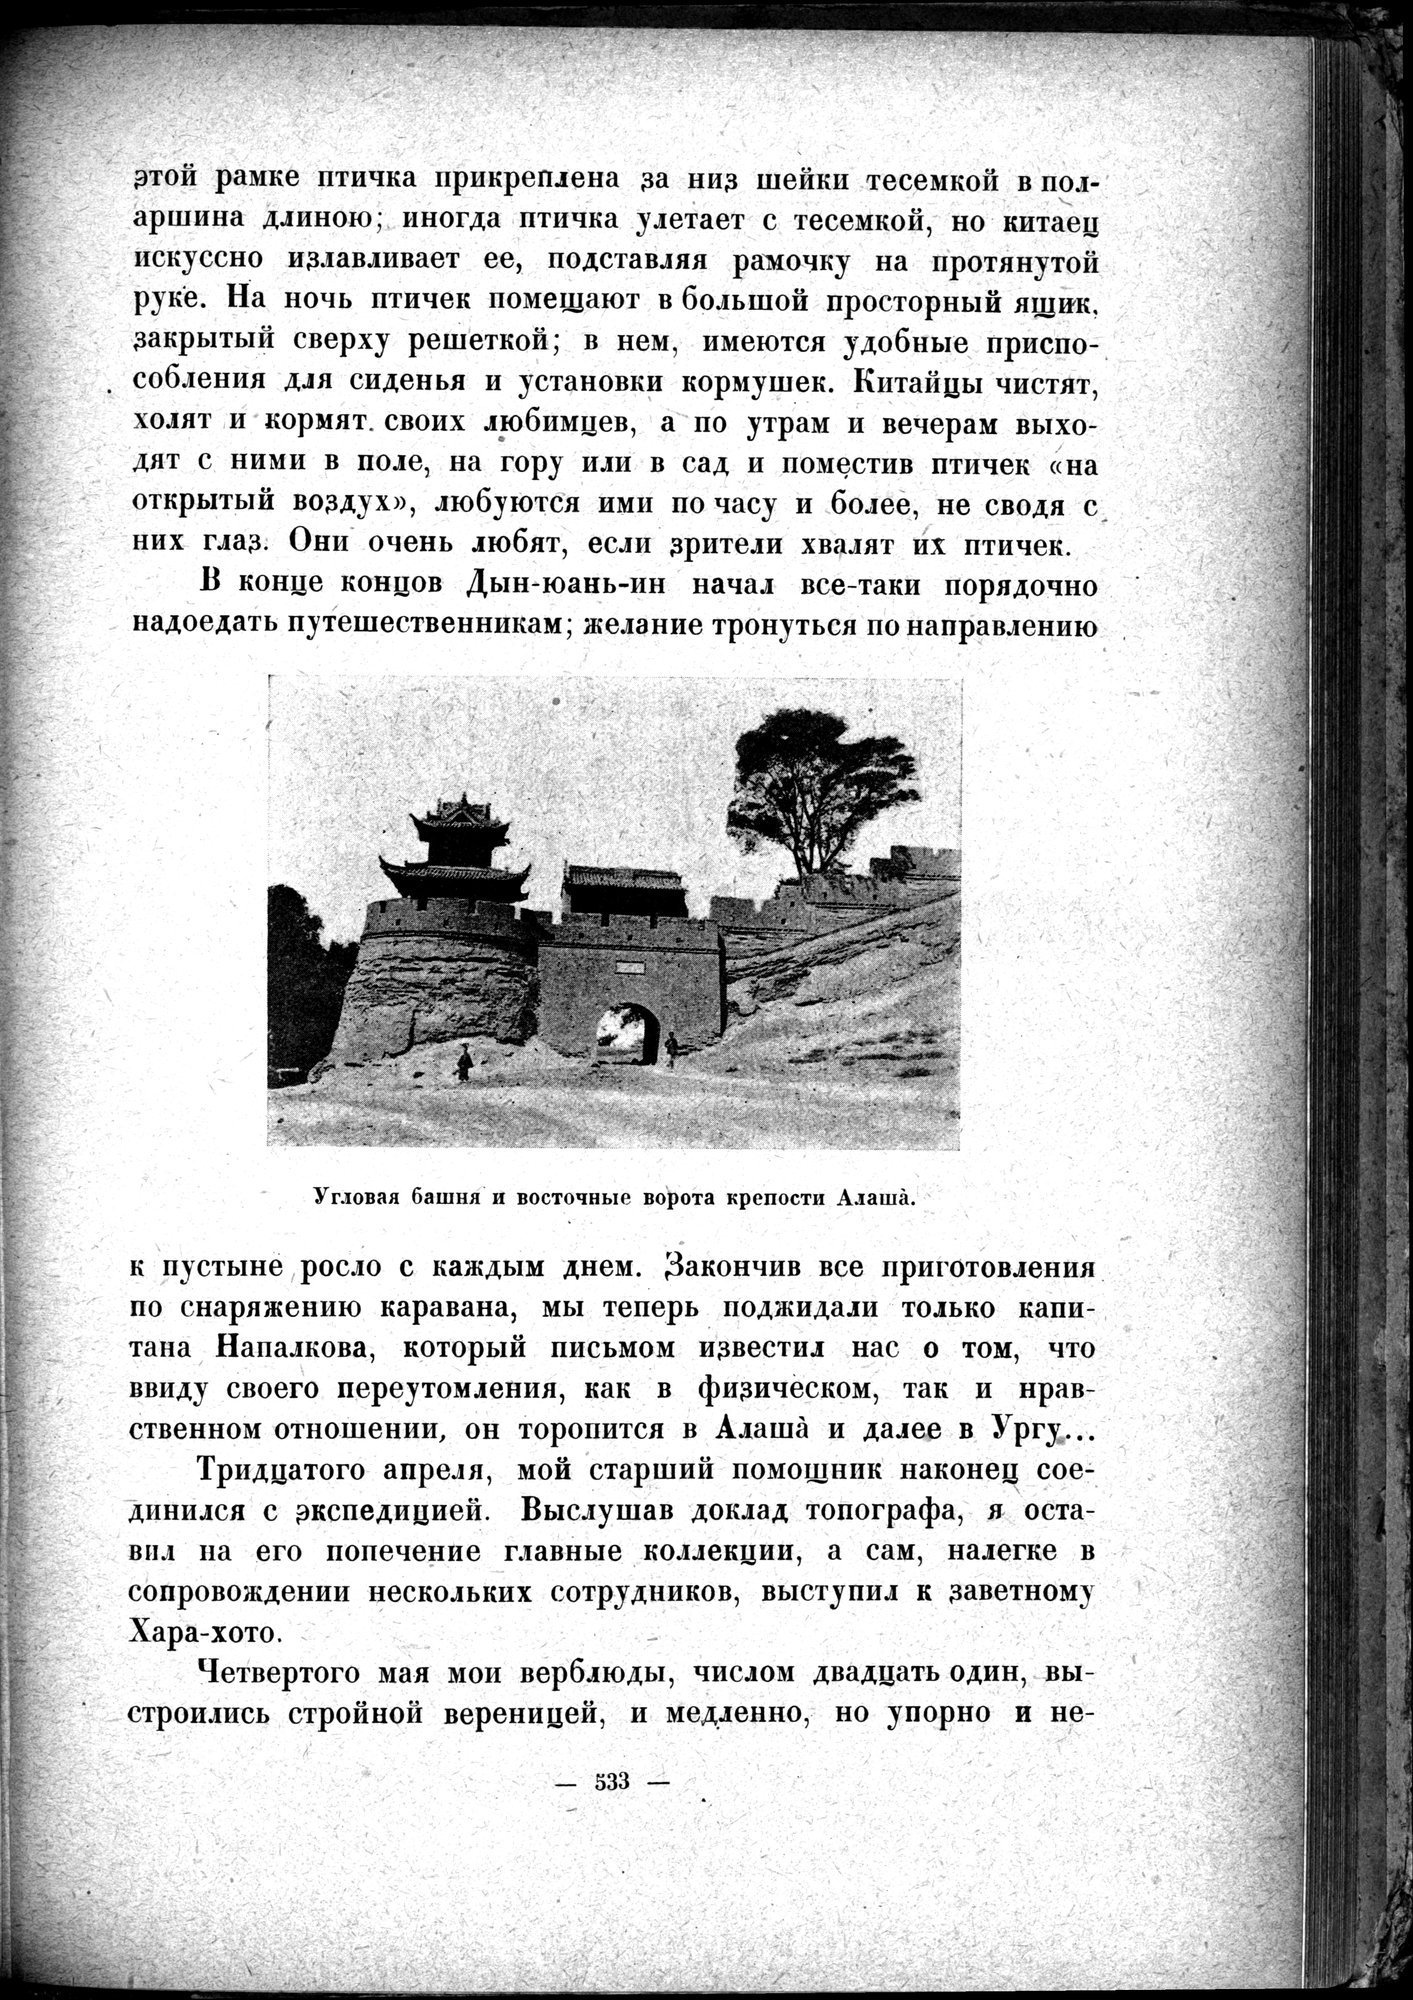 Mongoliya i Amdo i mertby gorod Khara-Khoto : vol.1 / Page 617 (Grayscale High Resolution Image)